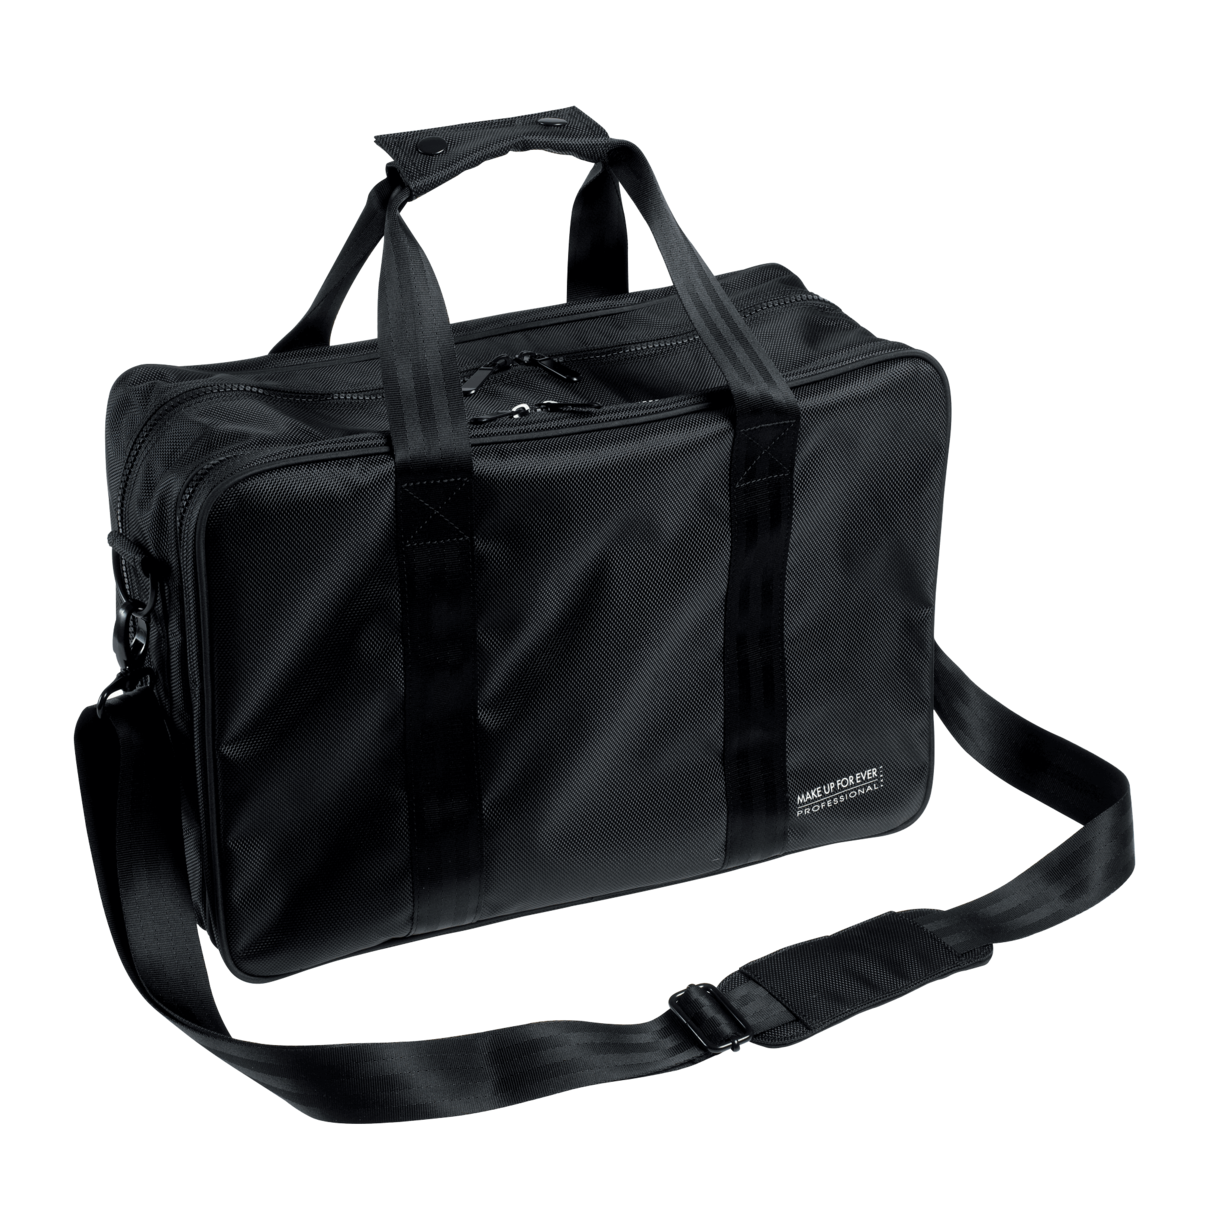 MAKE UP FOR EVER PROFESSIONAL BAG Prof krepšys lagaminas didelis tuščias